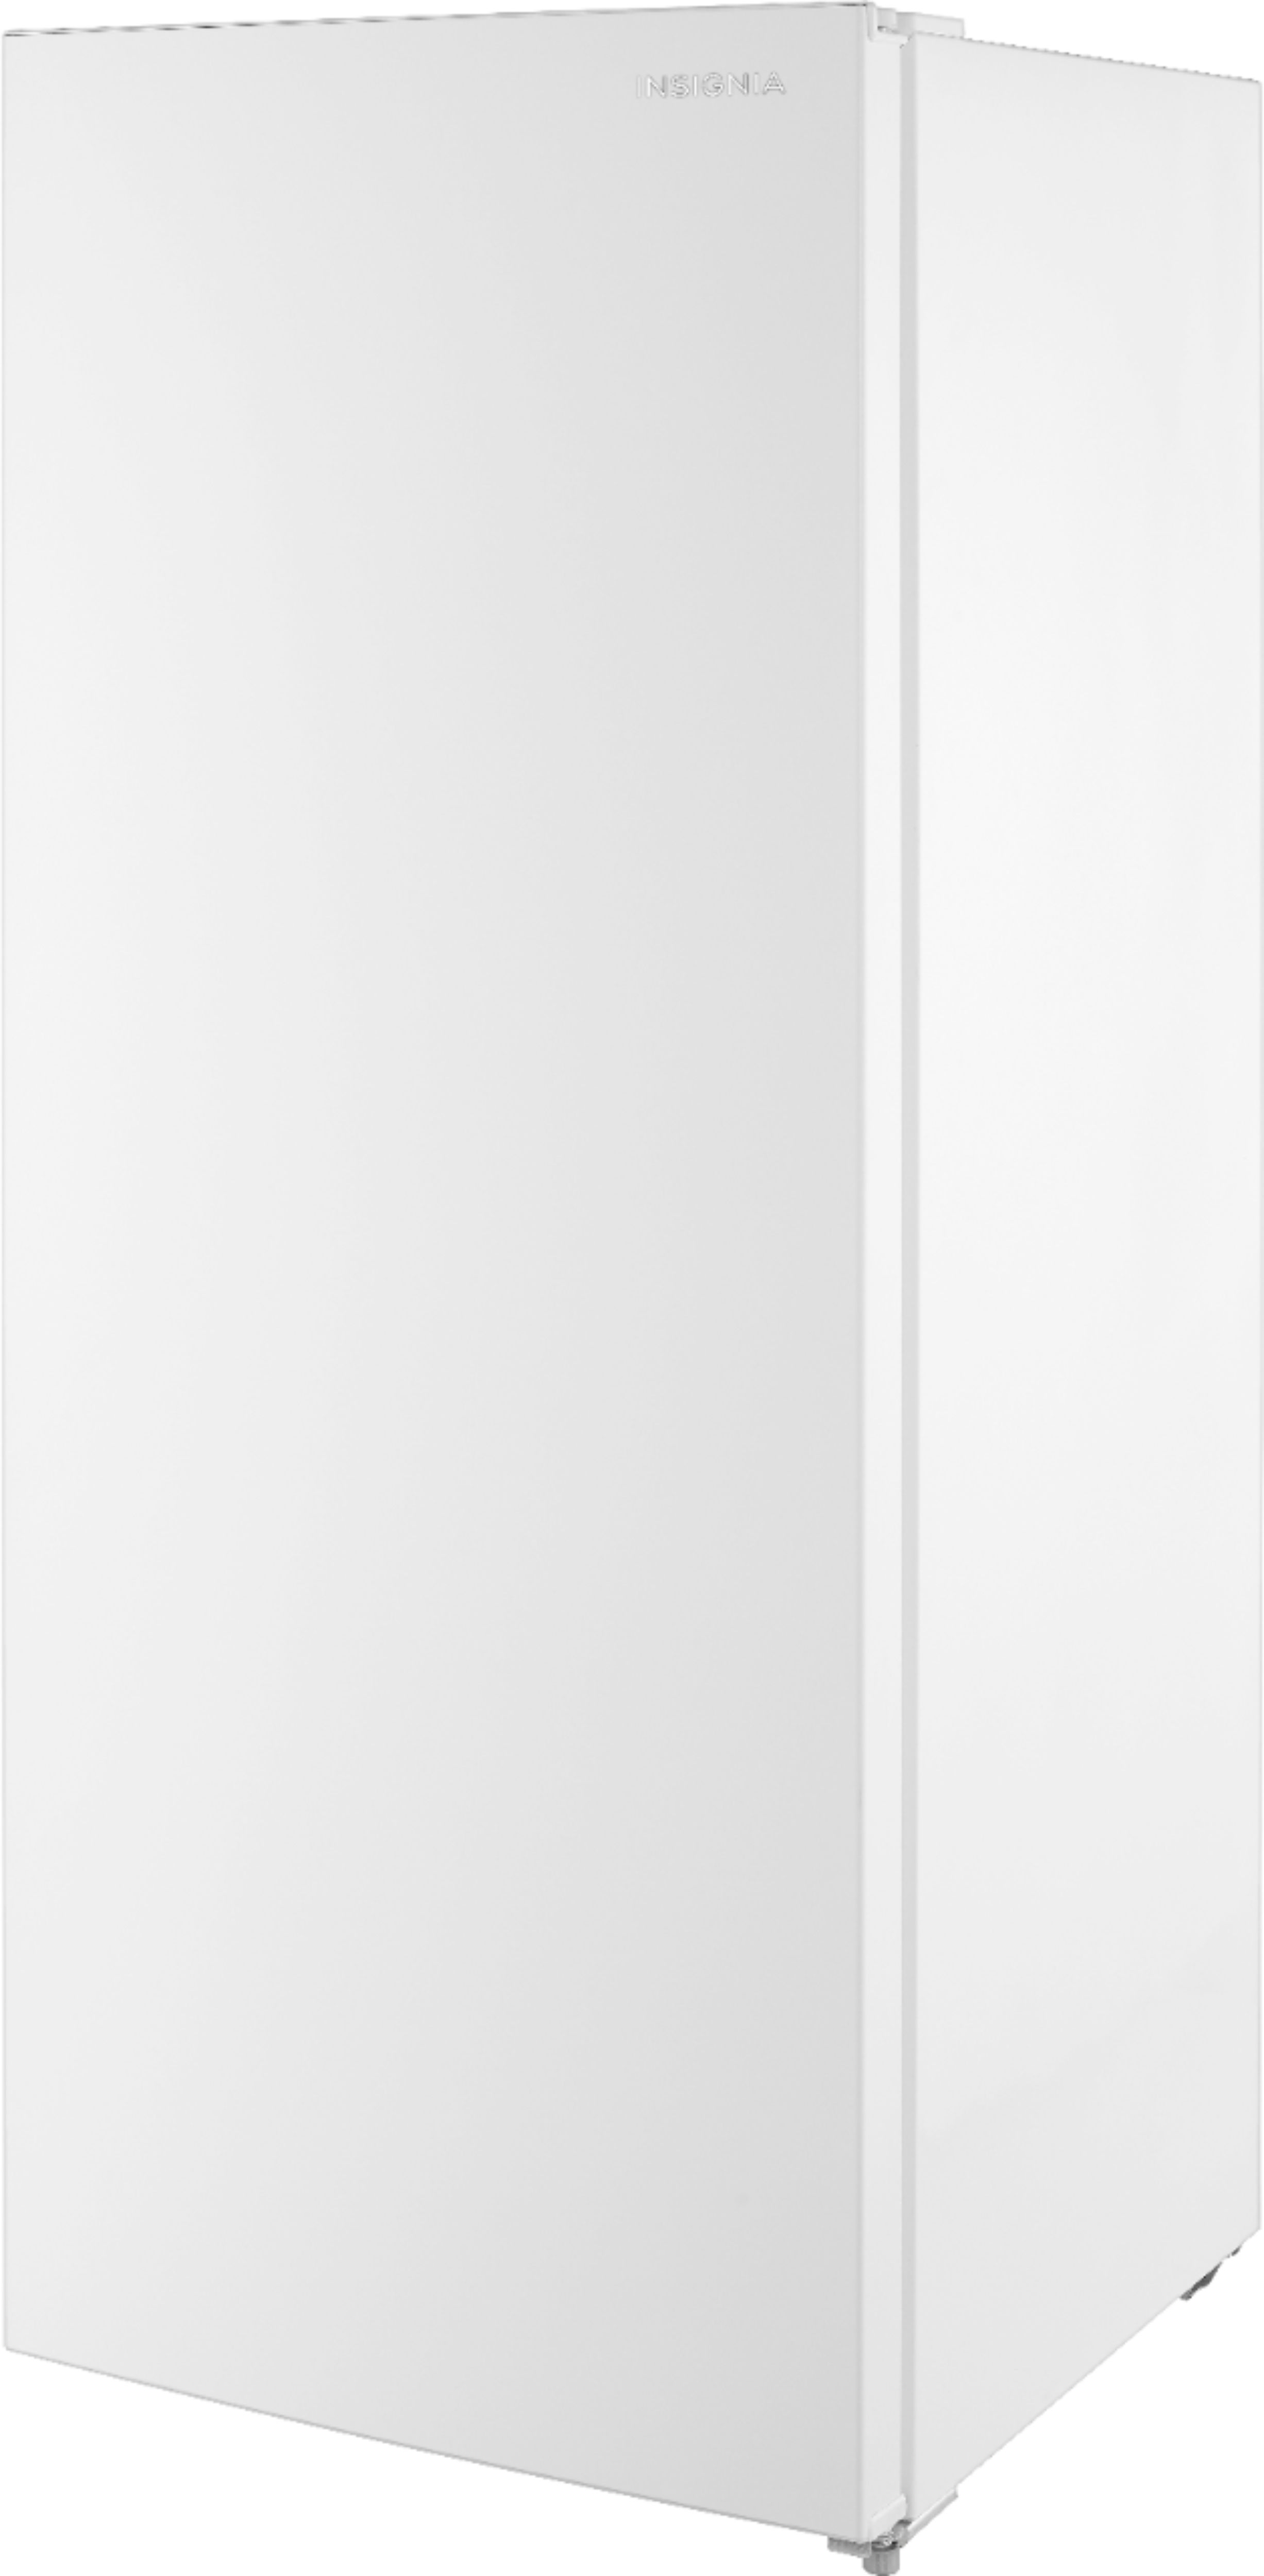 Insignia™ - 7 Cu. Ft. Garage Ready Convertible Upright Freezer - White